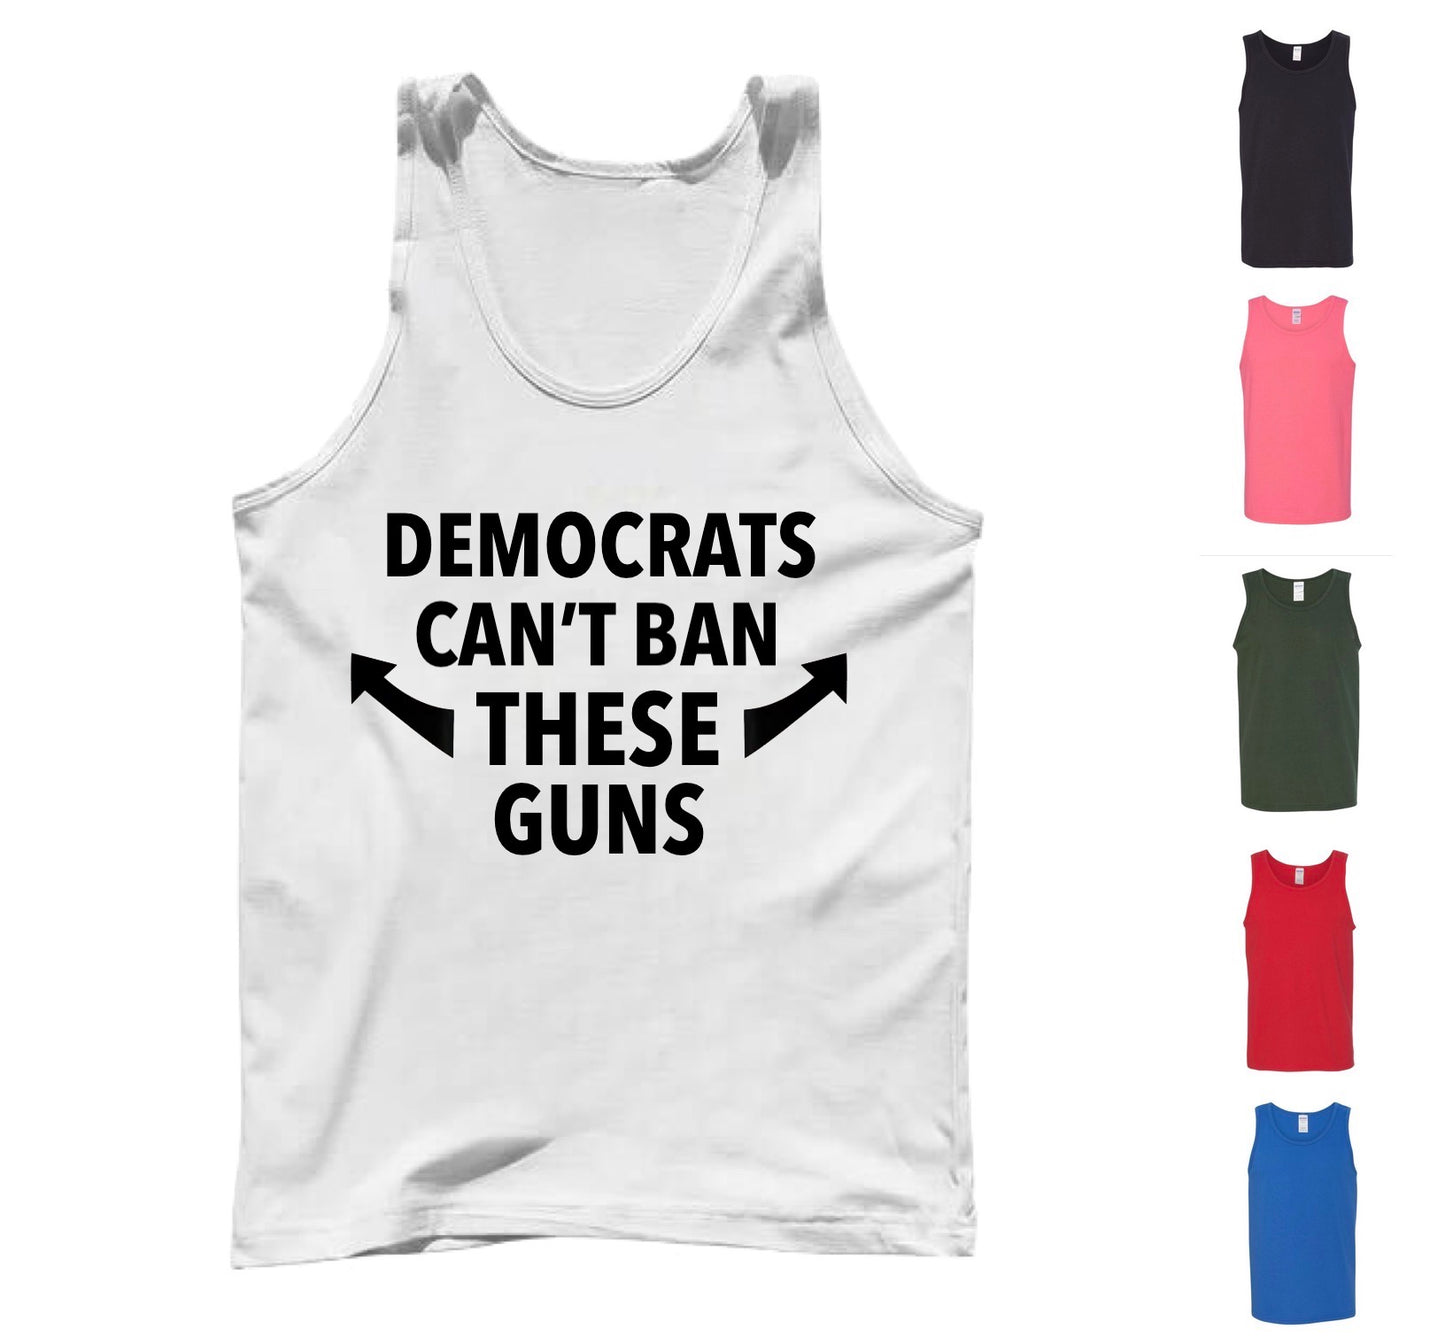 Democrats Can't Ban These Guns! (Free Shipping)